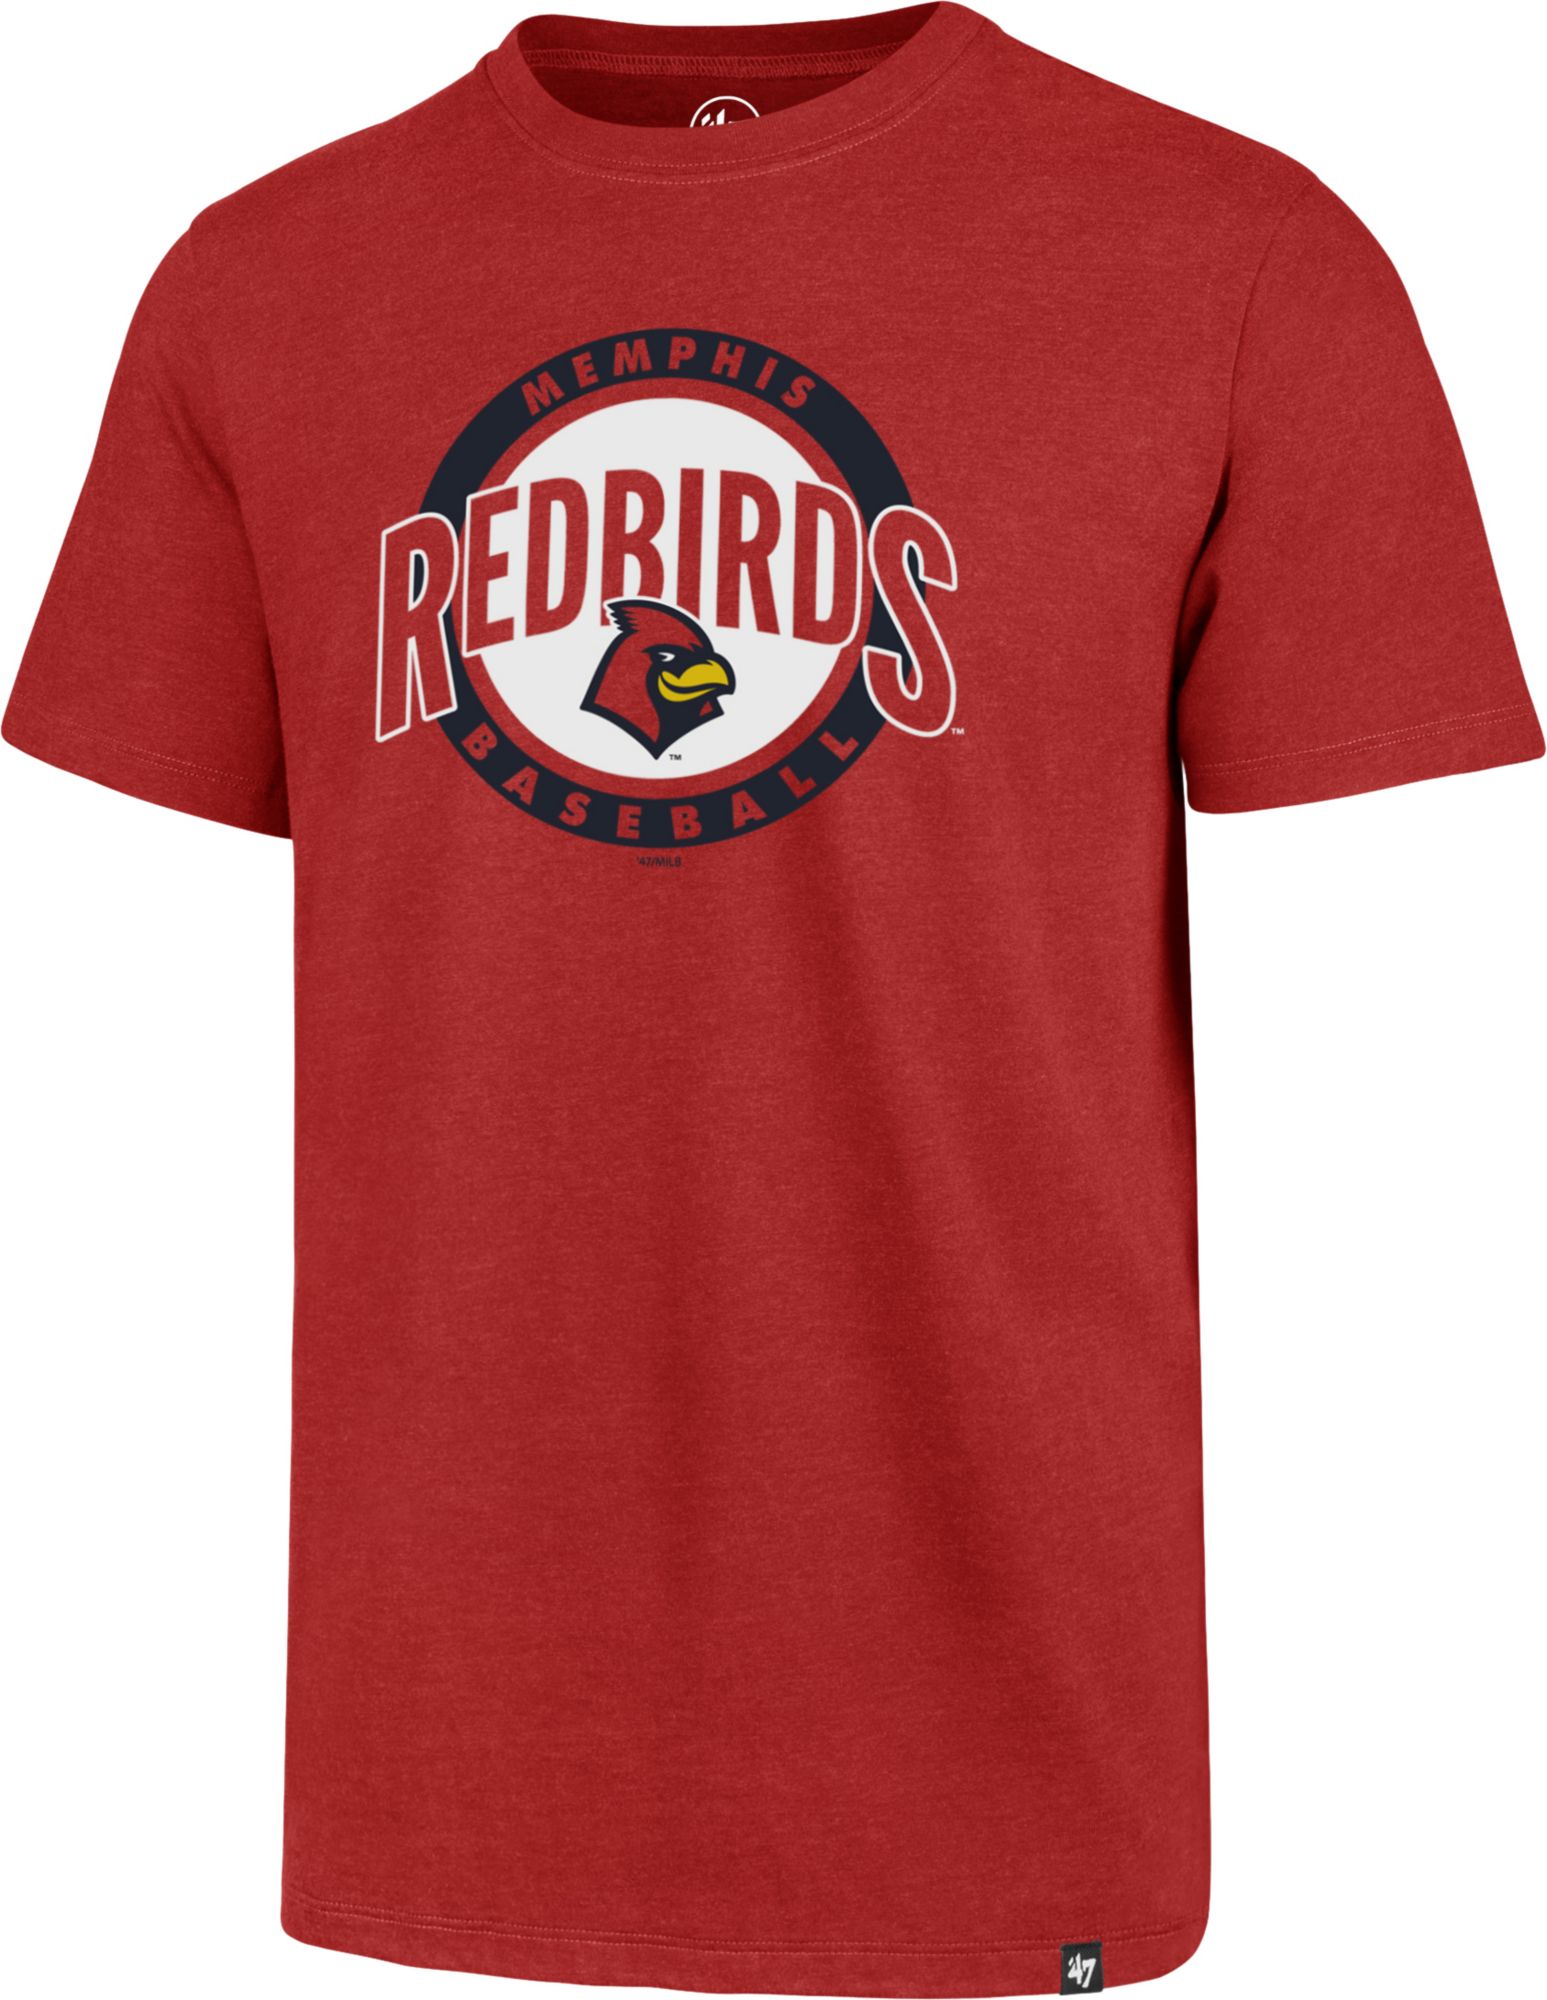 memphis redbirds jersey for sale